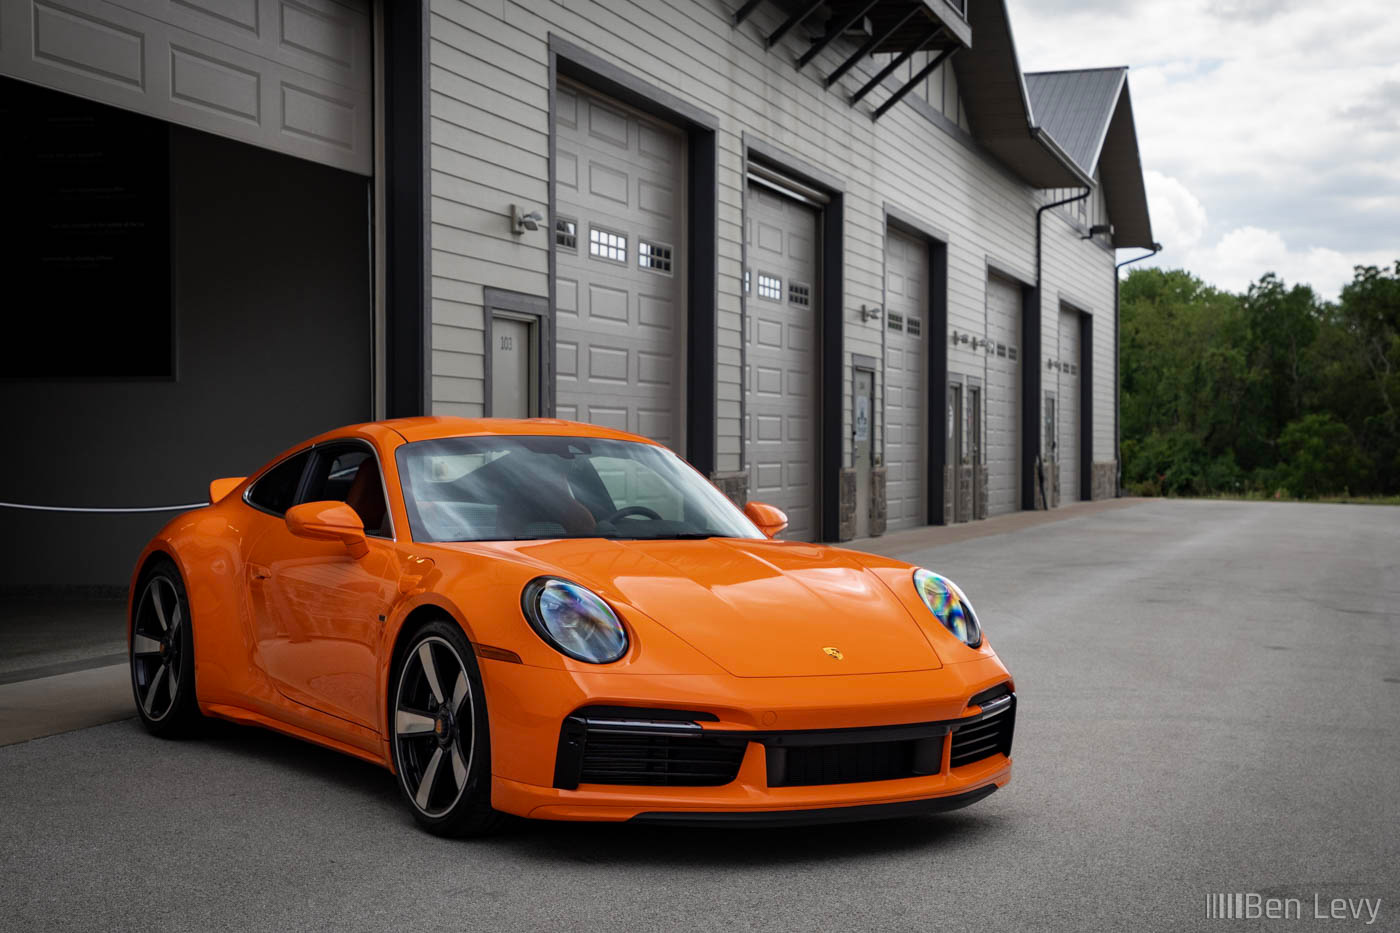 Oraneg Porsche 911 Sport Classic in front of luxory garage condos